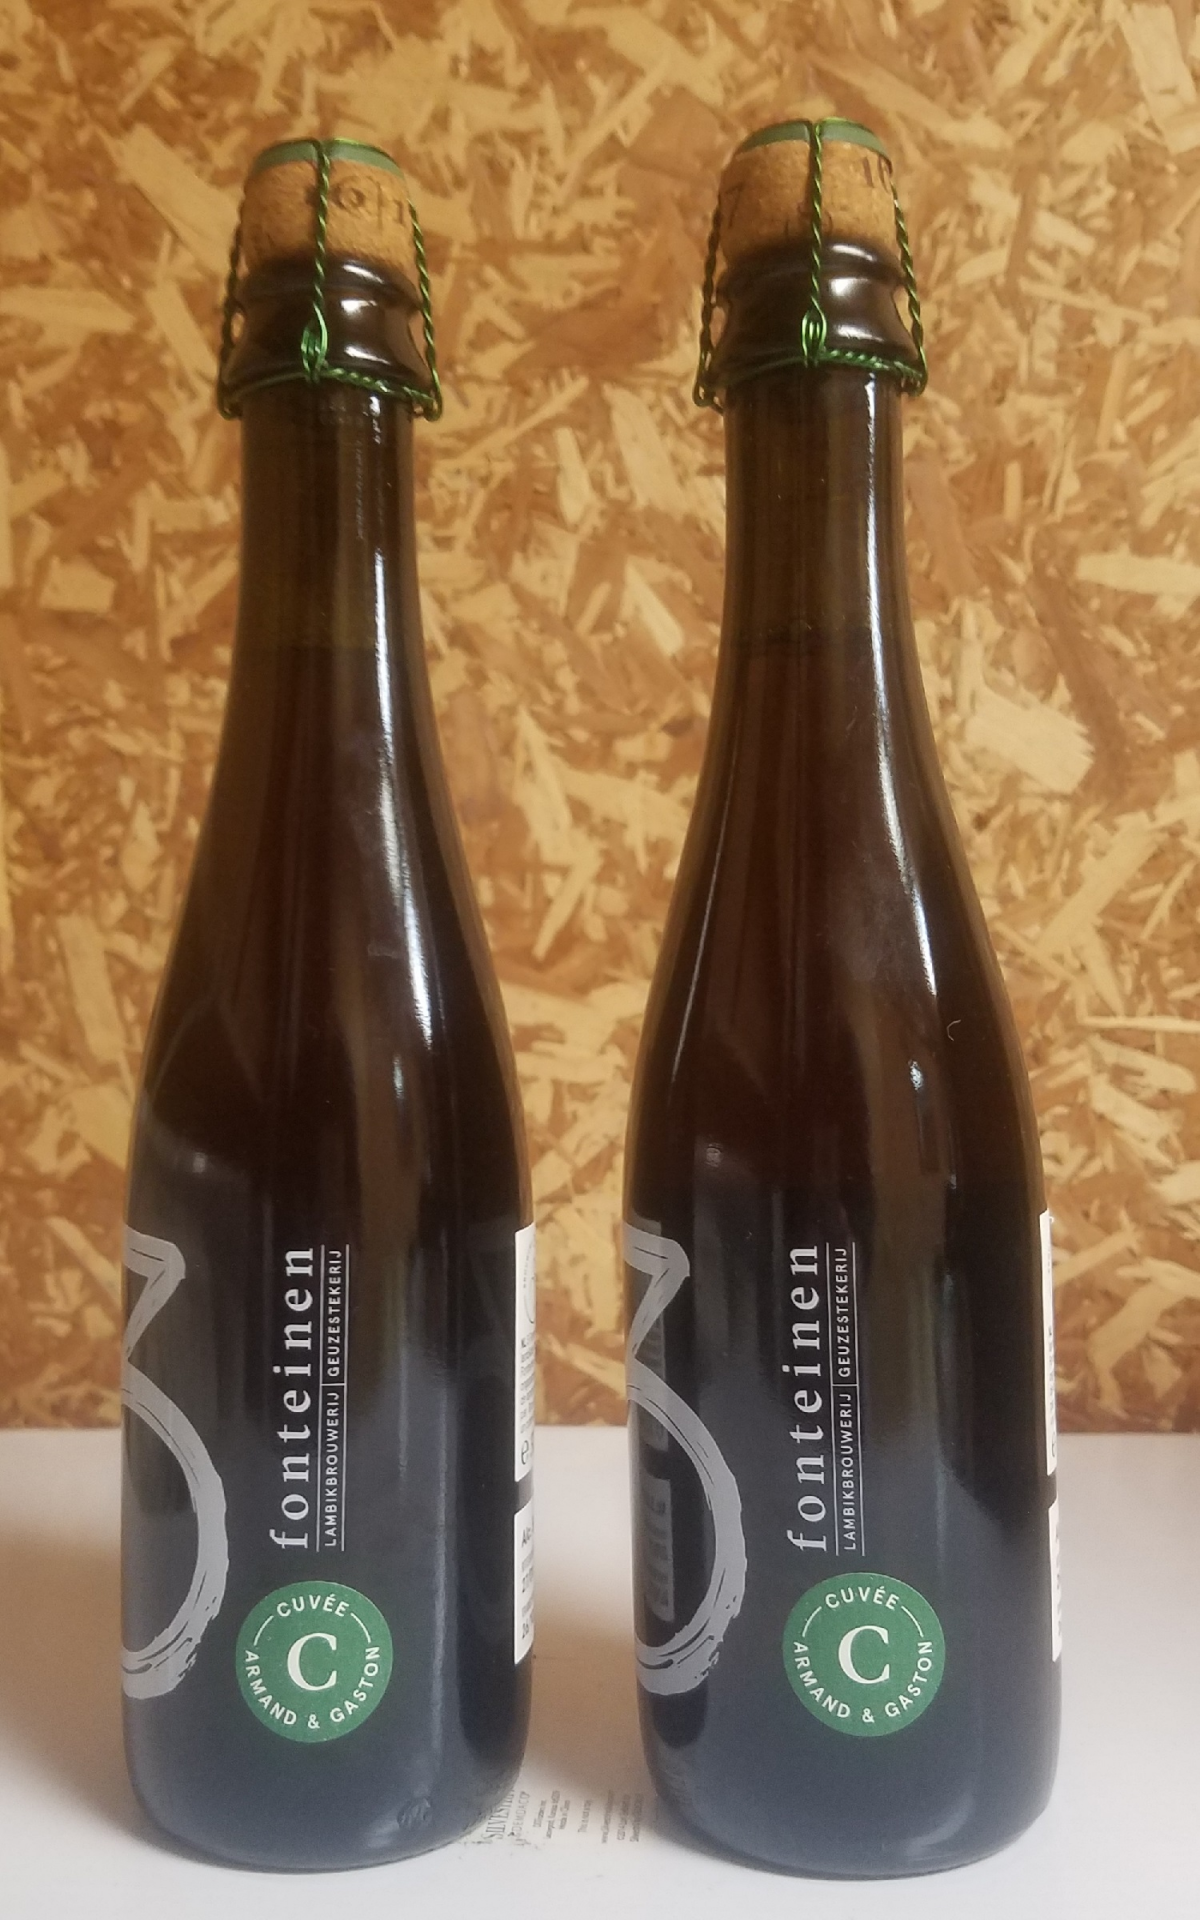 2 Bottle Lot: 3 Fonteinen Cuvée Armand & Gaston 16/17 375mls (Honey ...